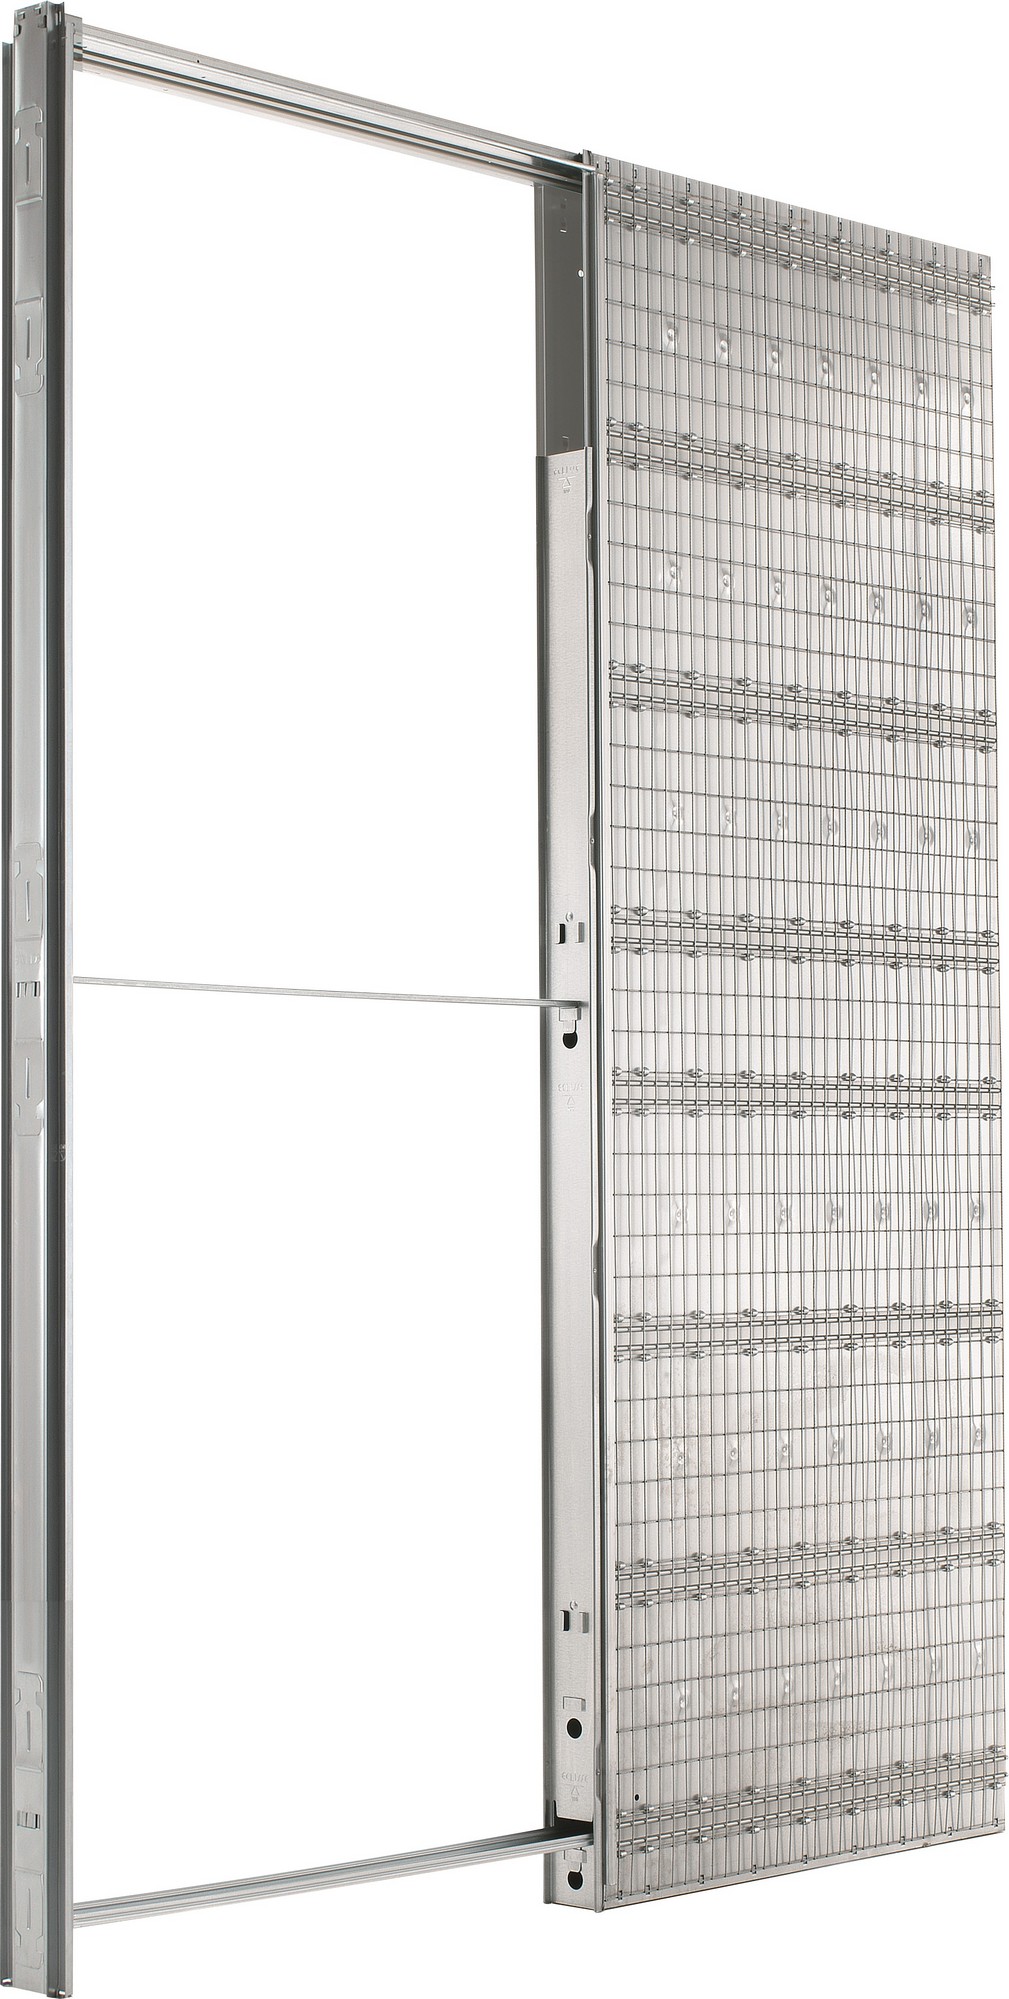 Pouzdro Eclisse Standard 800/2100 mm do zdiva tl. 125 mm